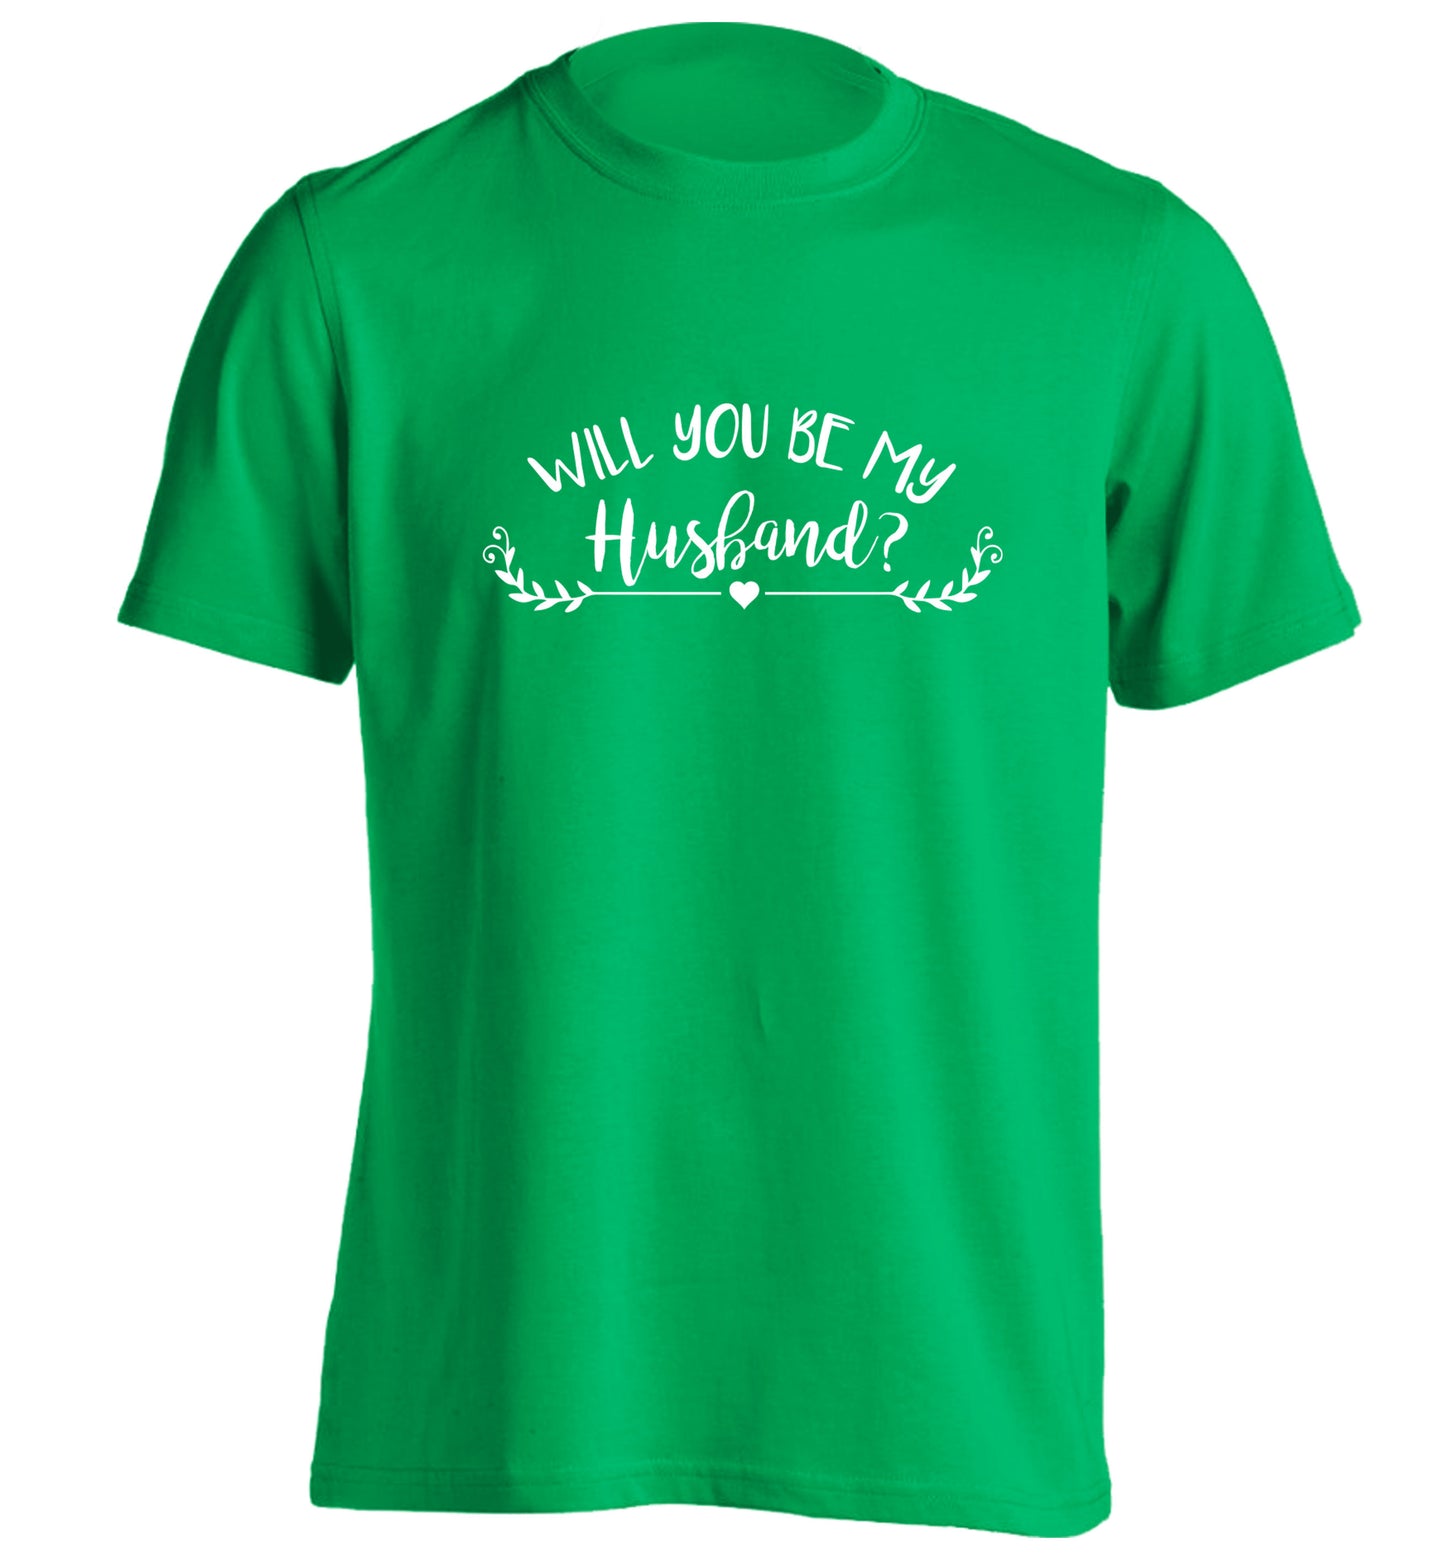 Will you be my husband? adults unisex green Tshirt 2XL